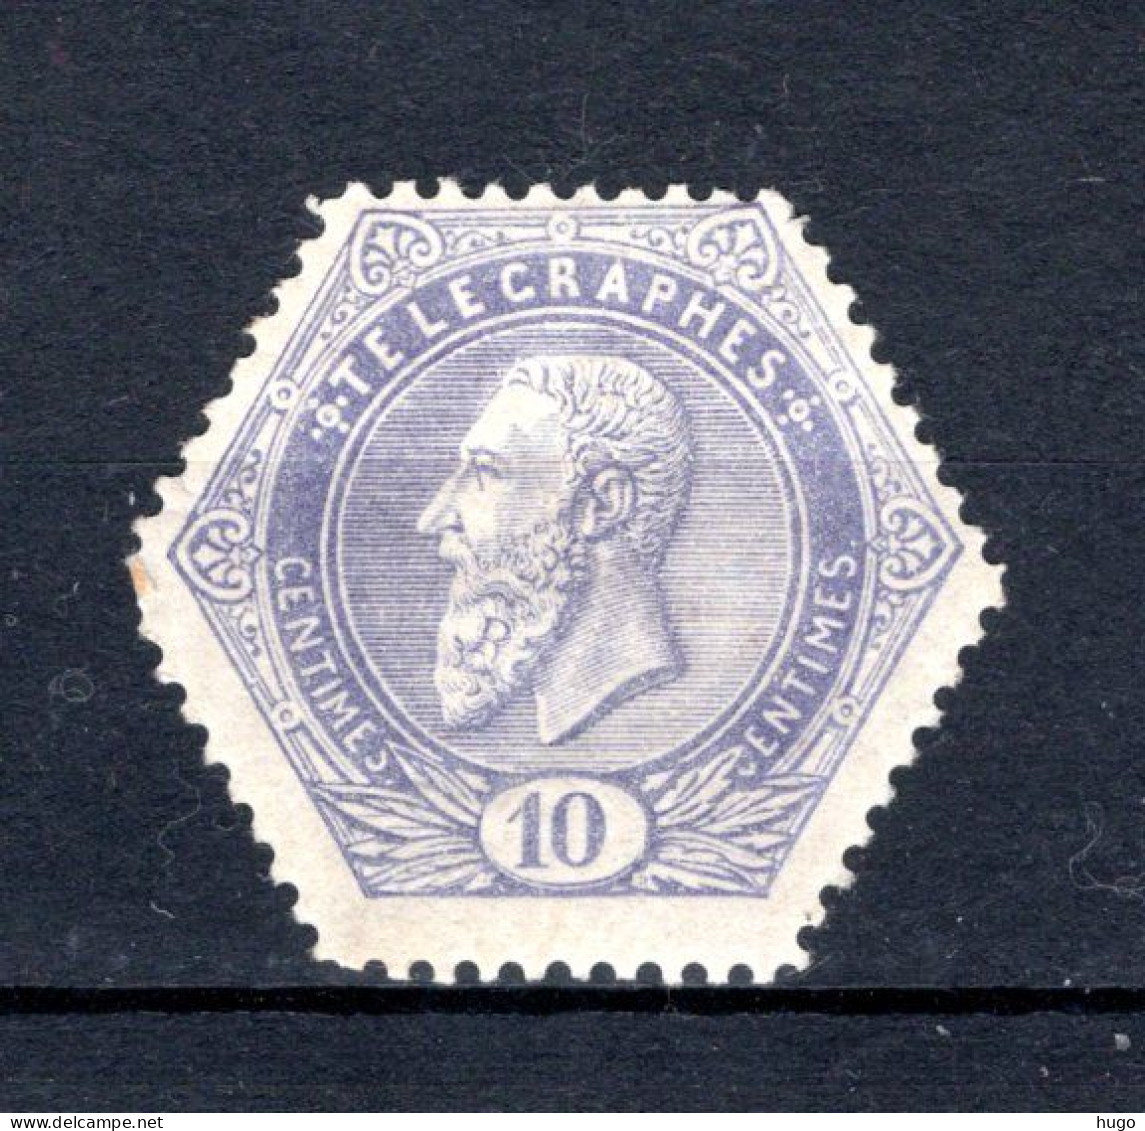 TG11 MNH 1880 - Koning Leopold II Met Gelijnde Achtergrond - Telegraphenmarken [TG]